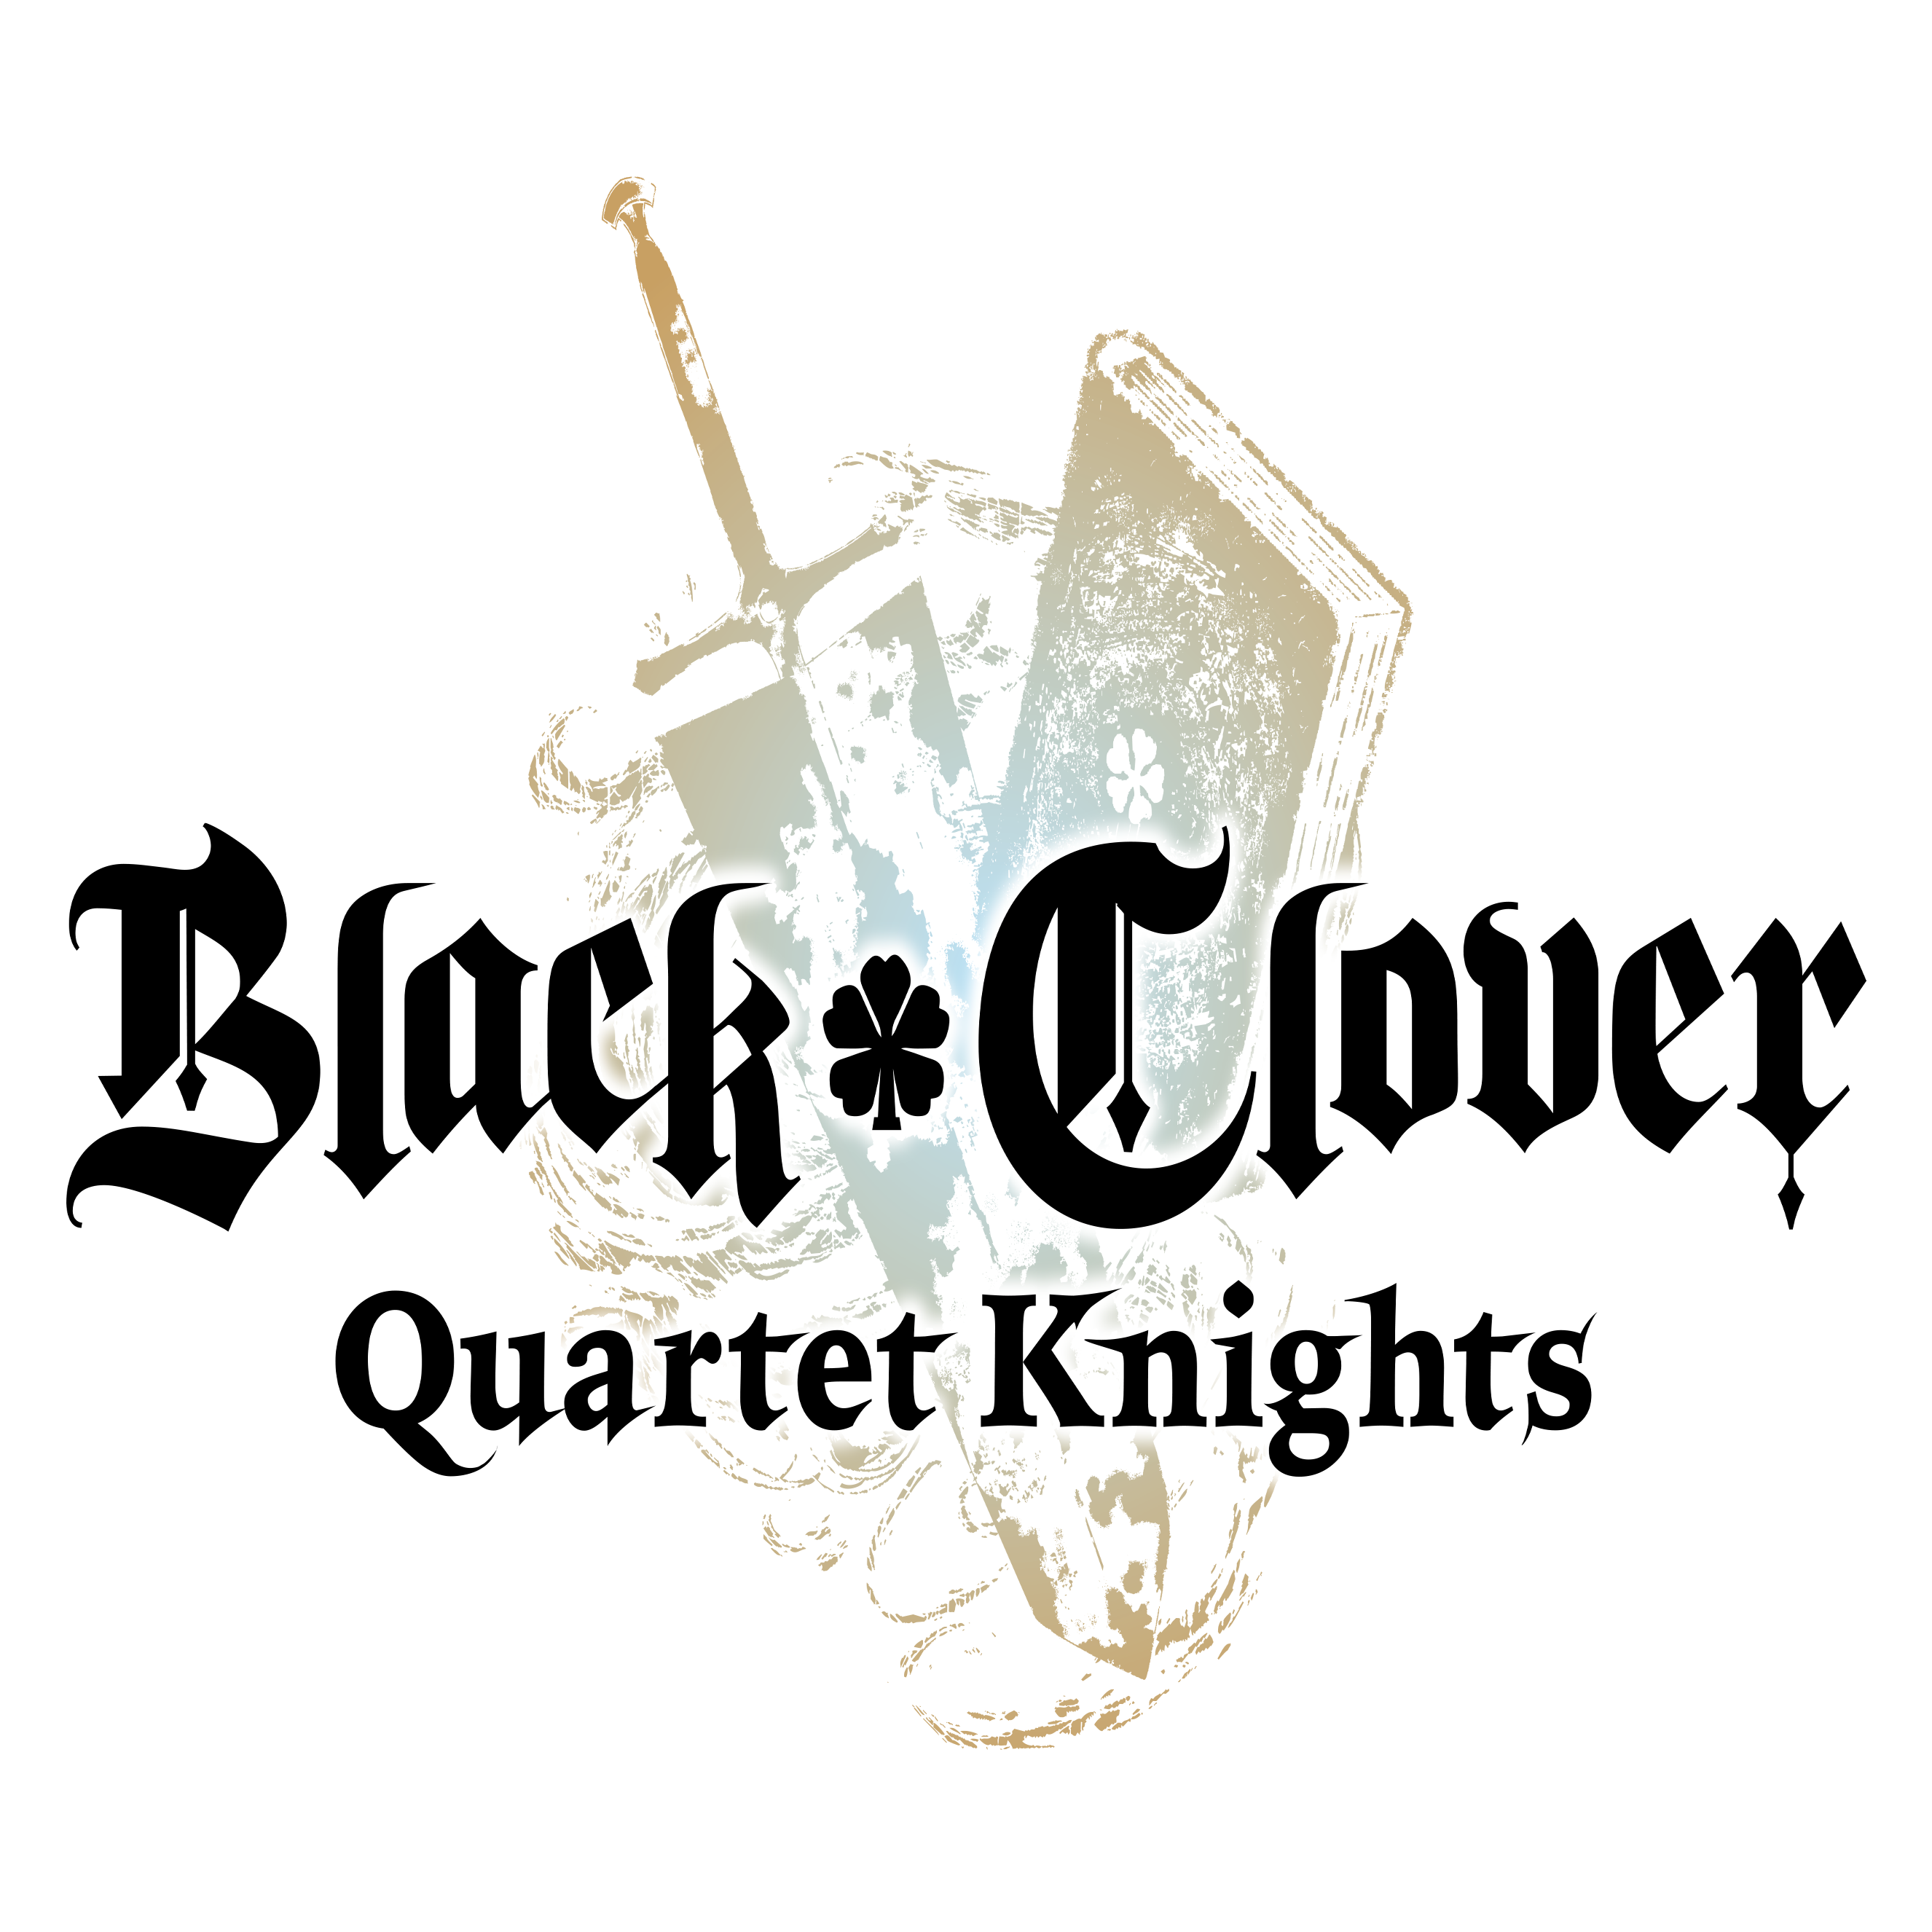 Black Clover Quartet Knights releasedatum aangekondigd